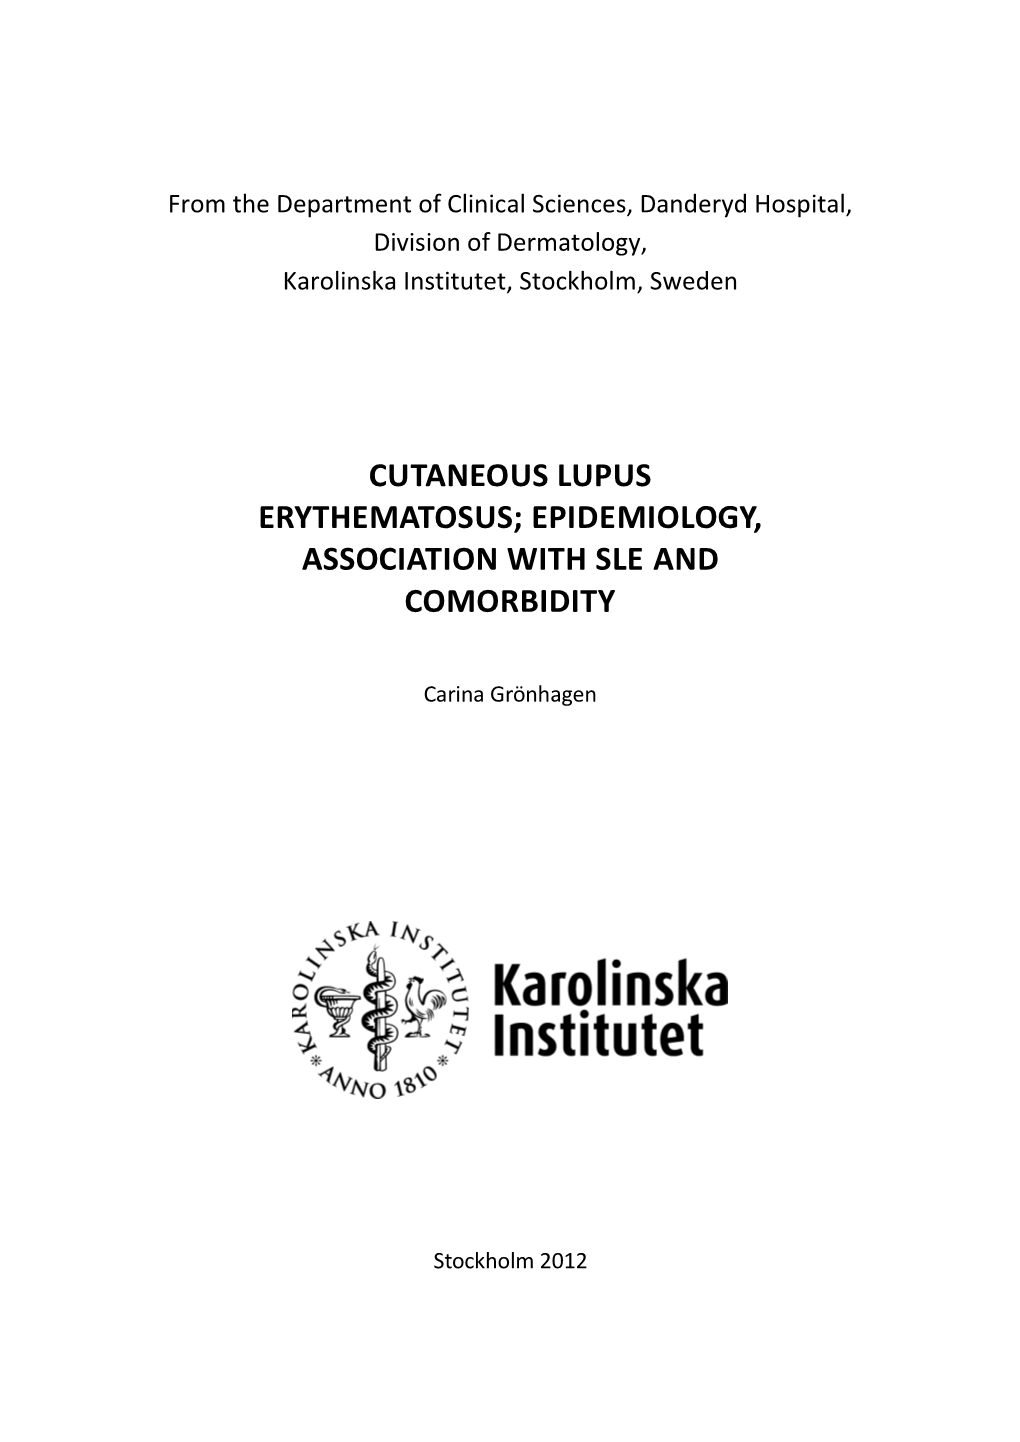 Cutaneous Lupus Erythematosus; Epidemiology, Association with Sle and Comorbidity